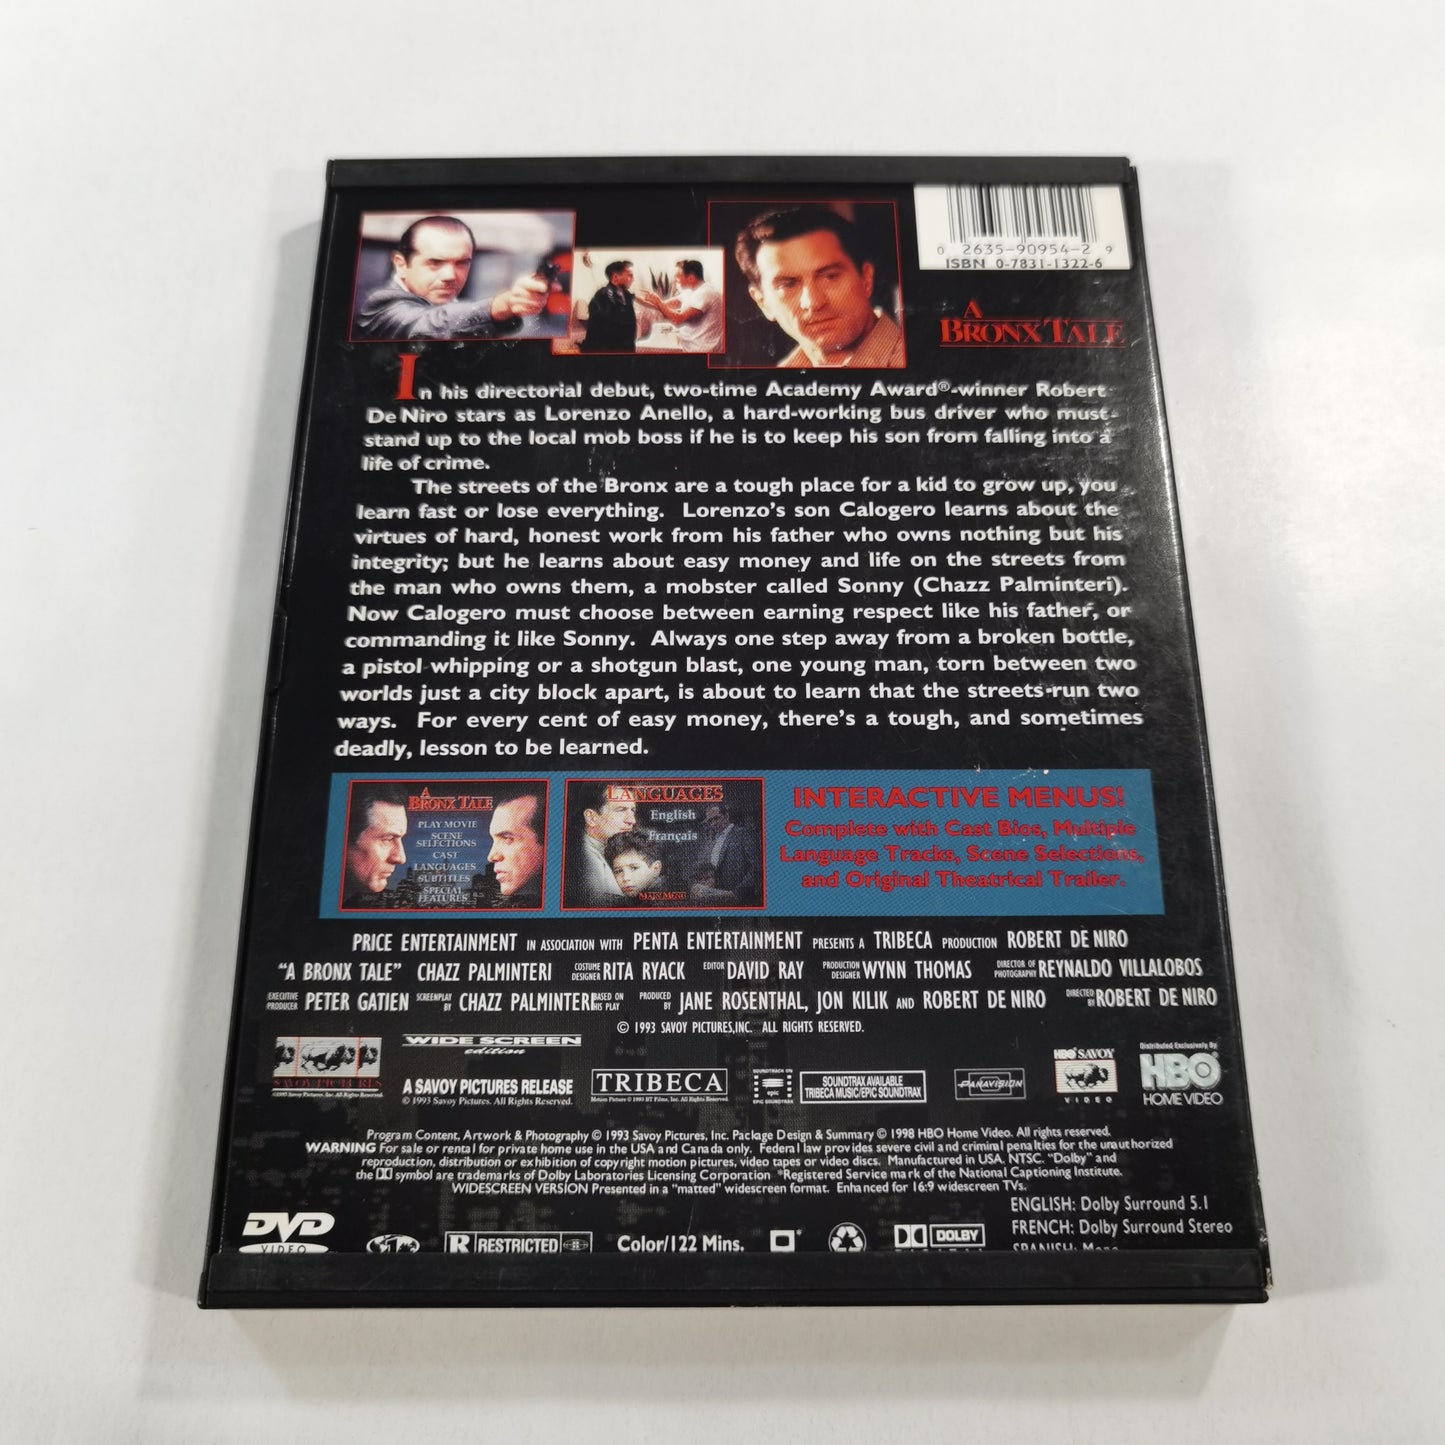 A Bronx Tale (1993) - DVD US 1998 Snap Case